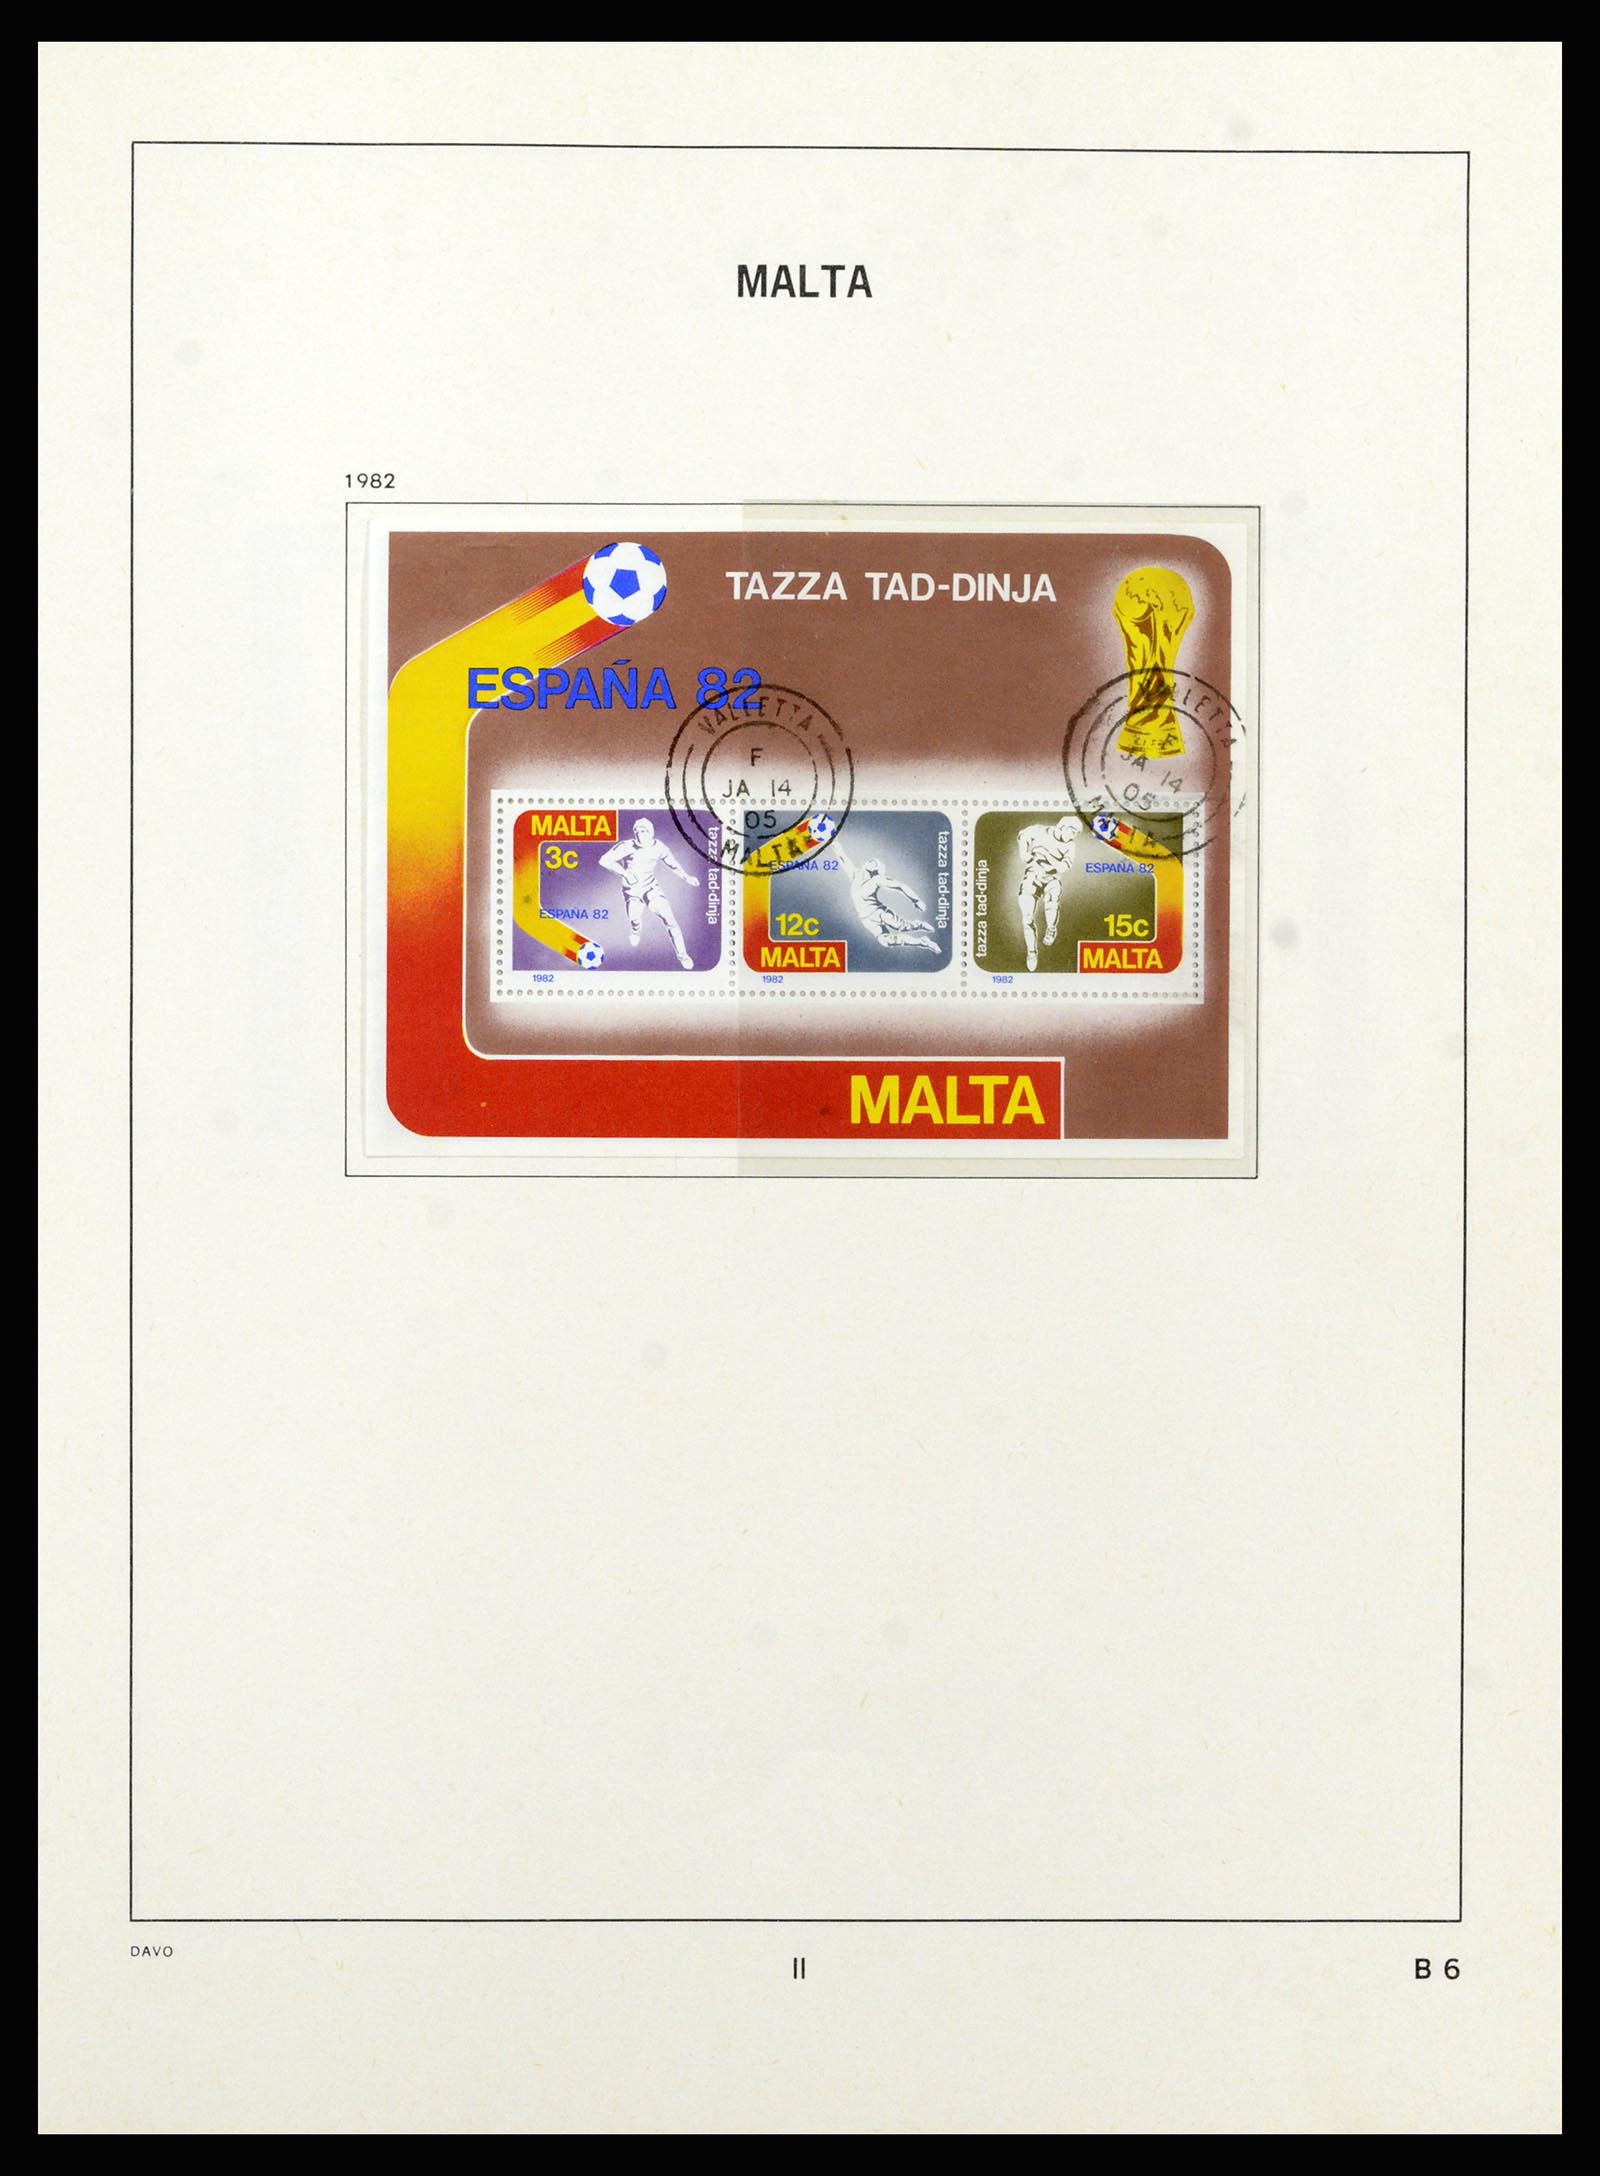 37212 080 - Stamp collection 37212 Malta 1863-1989.